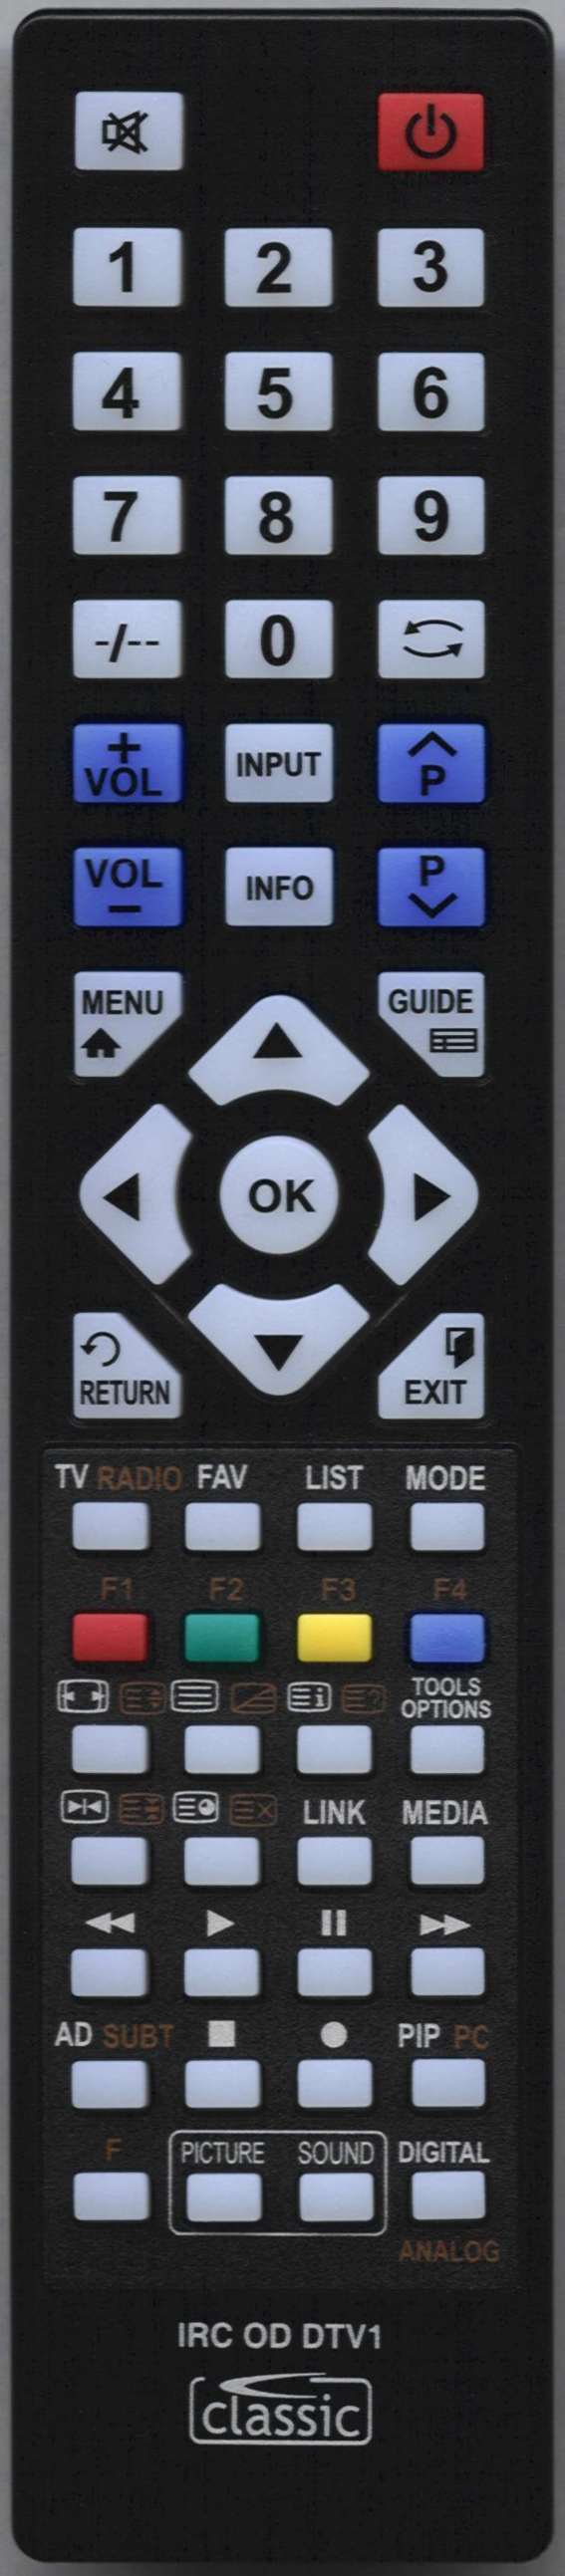 ALBA CTV4889 Remote Control Alternative